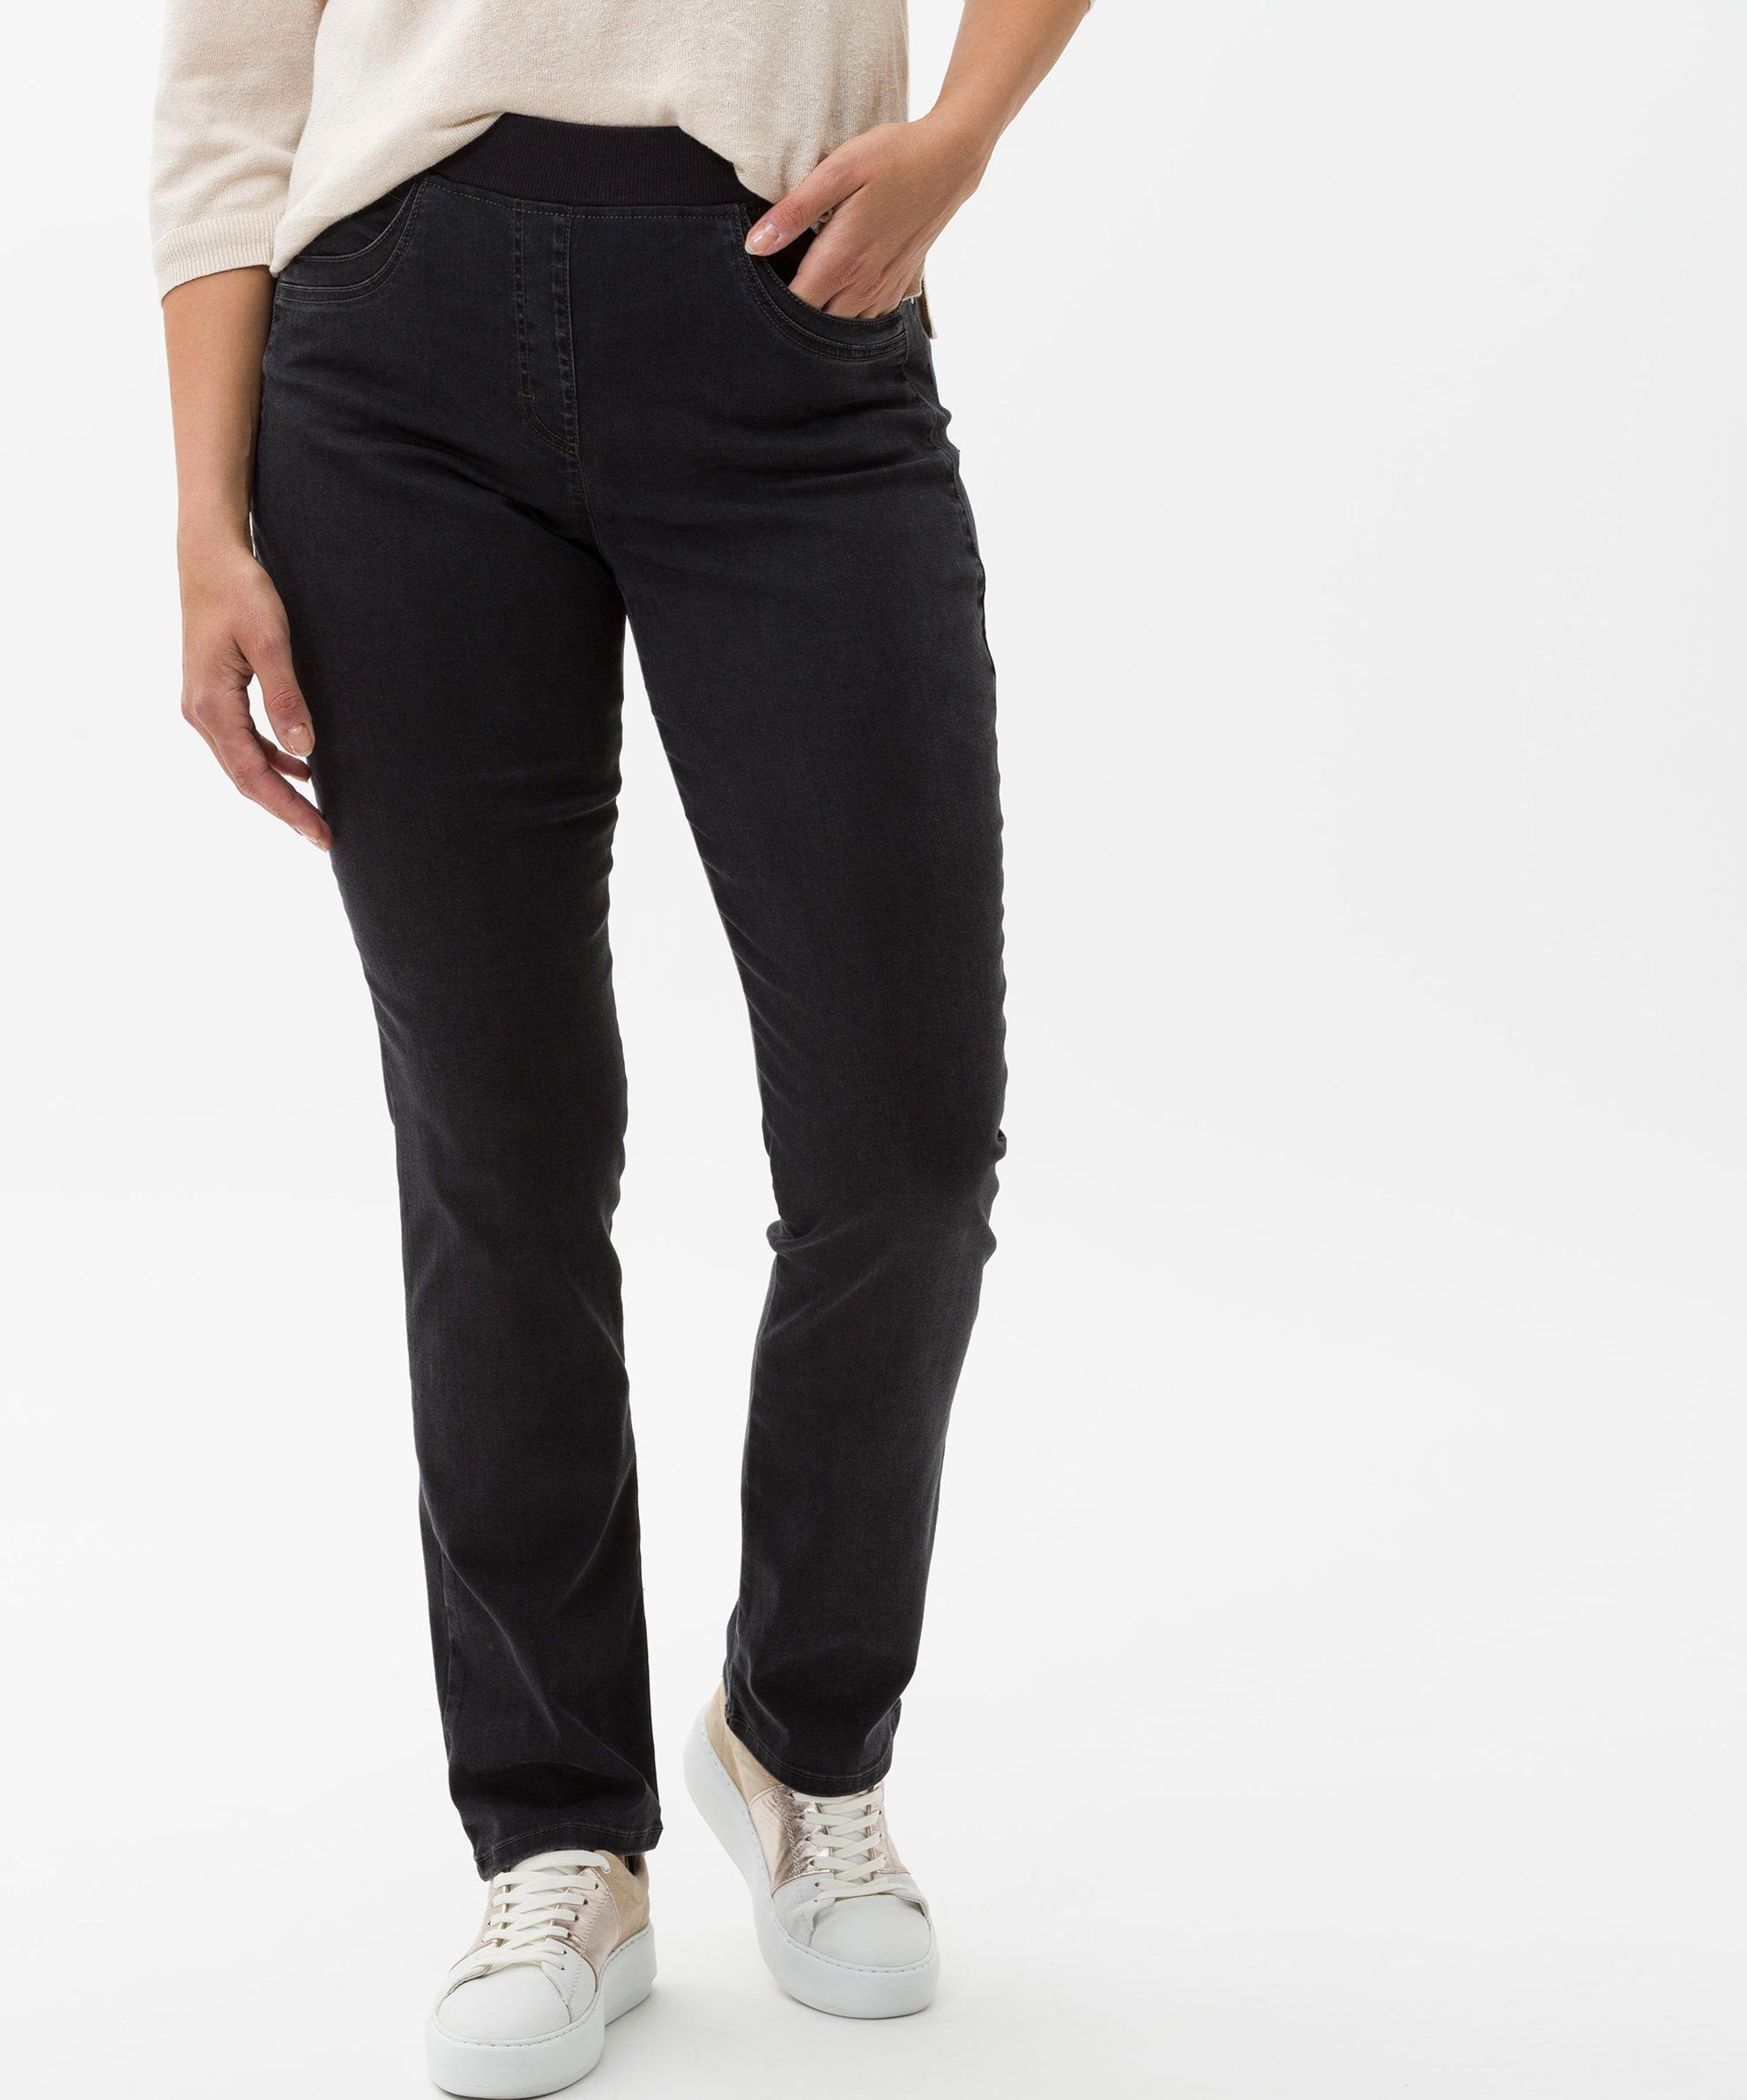 Style anthra Pamina RAPHAELA BRAX 5-Pocket-Jeans by